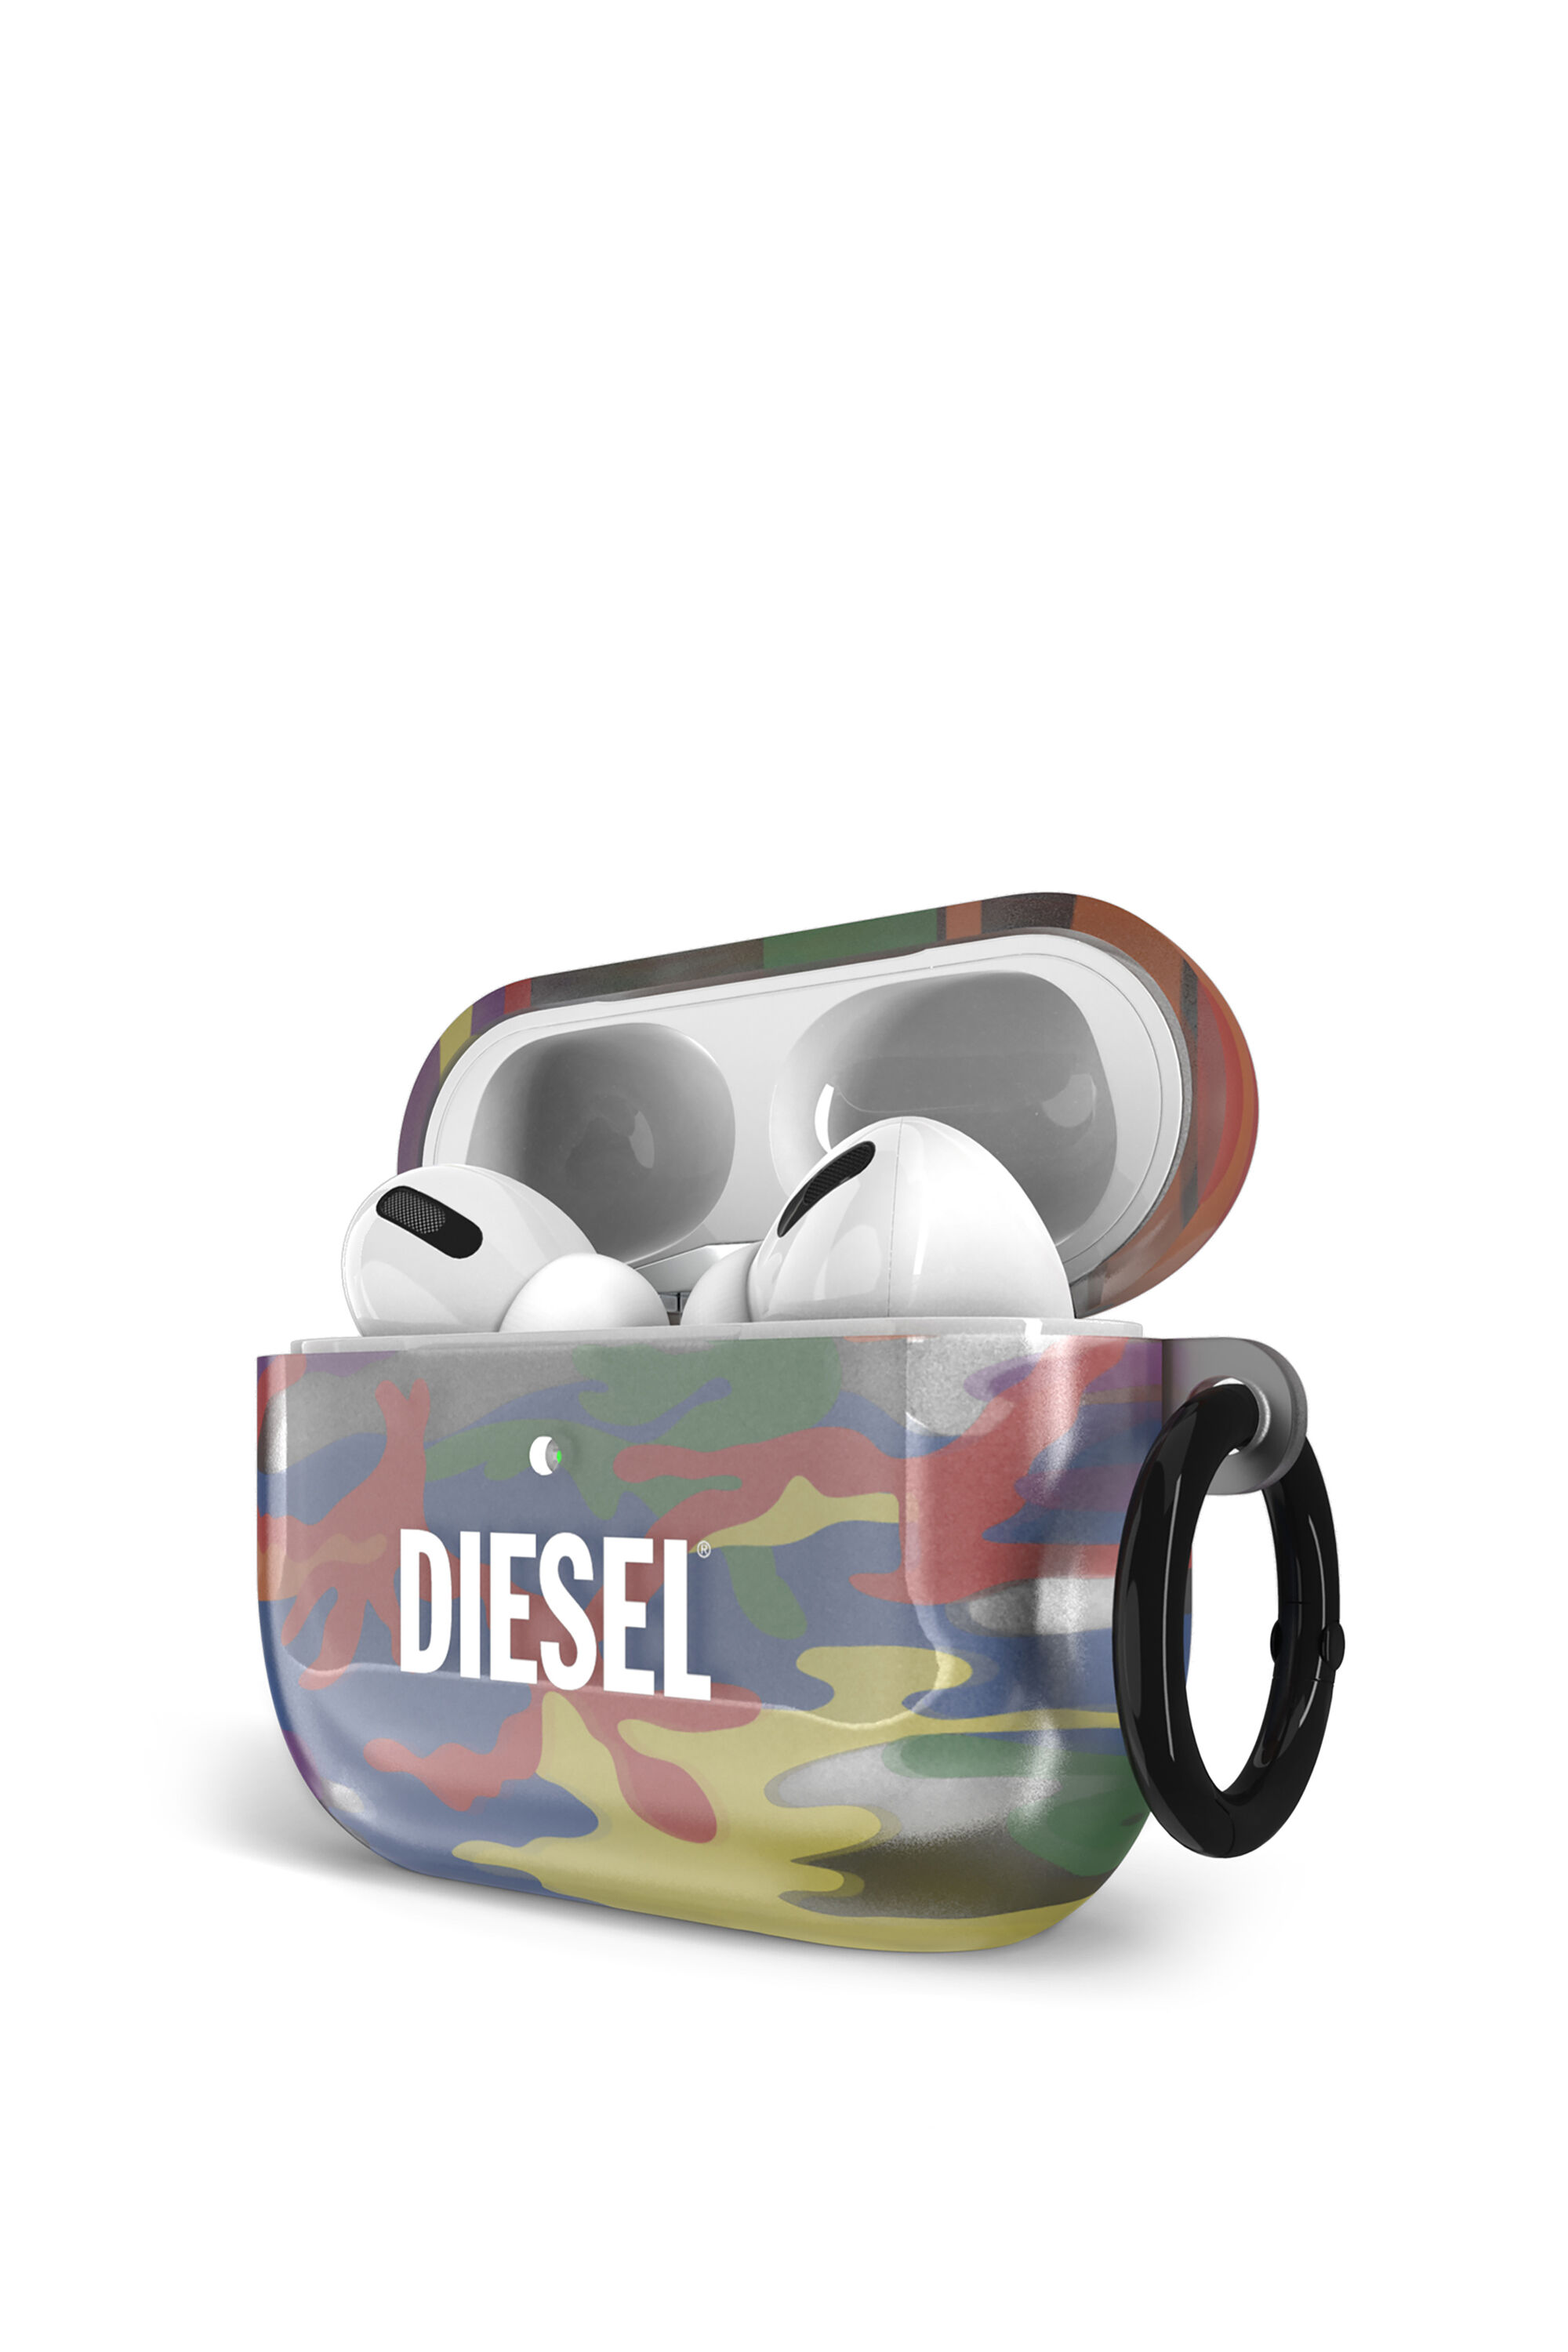 Diesel - 44344   AIRPOD CASE, Multicolor - Image 3